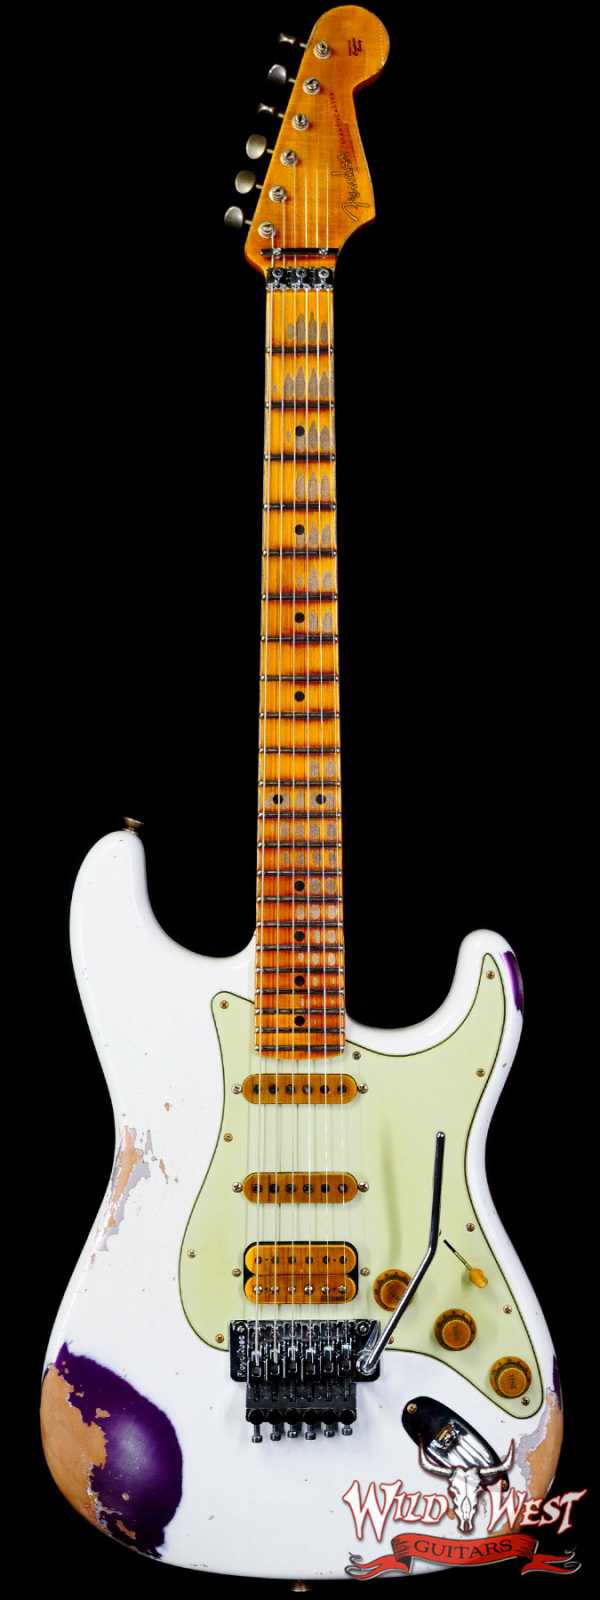 Fender Custom Shop Wild West White Lightning Stratocaster HSS Floyd Rose Maple Board 22 Frets Heavy Relic Purple Metallic